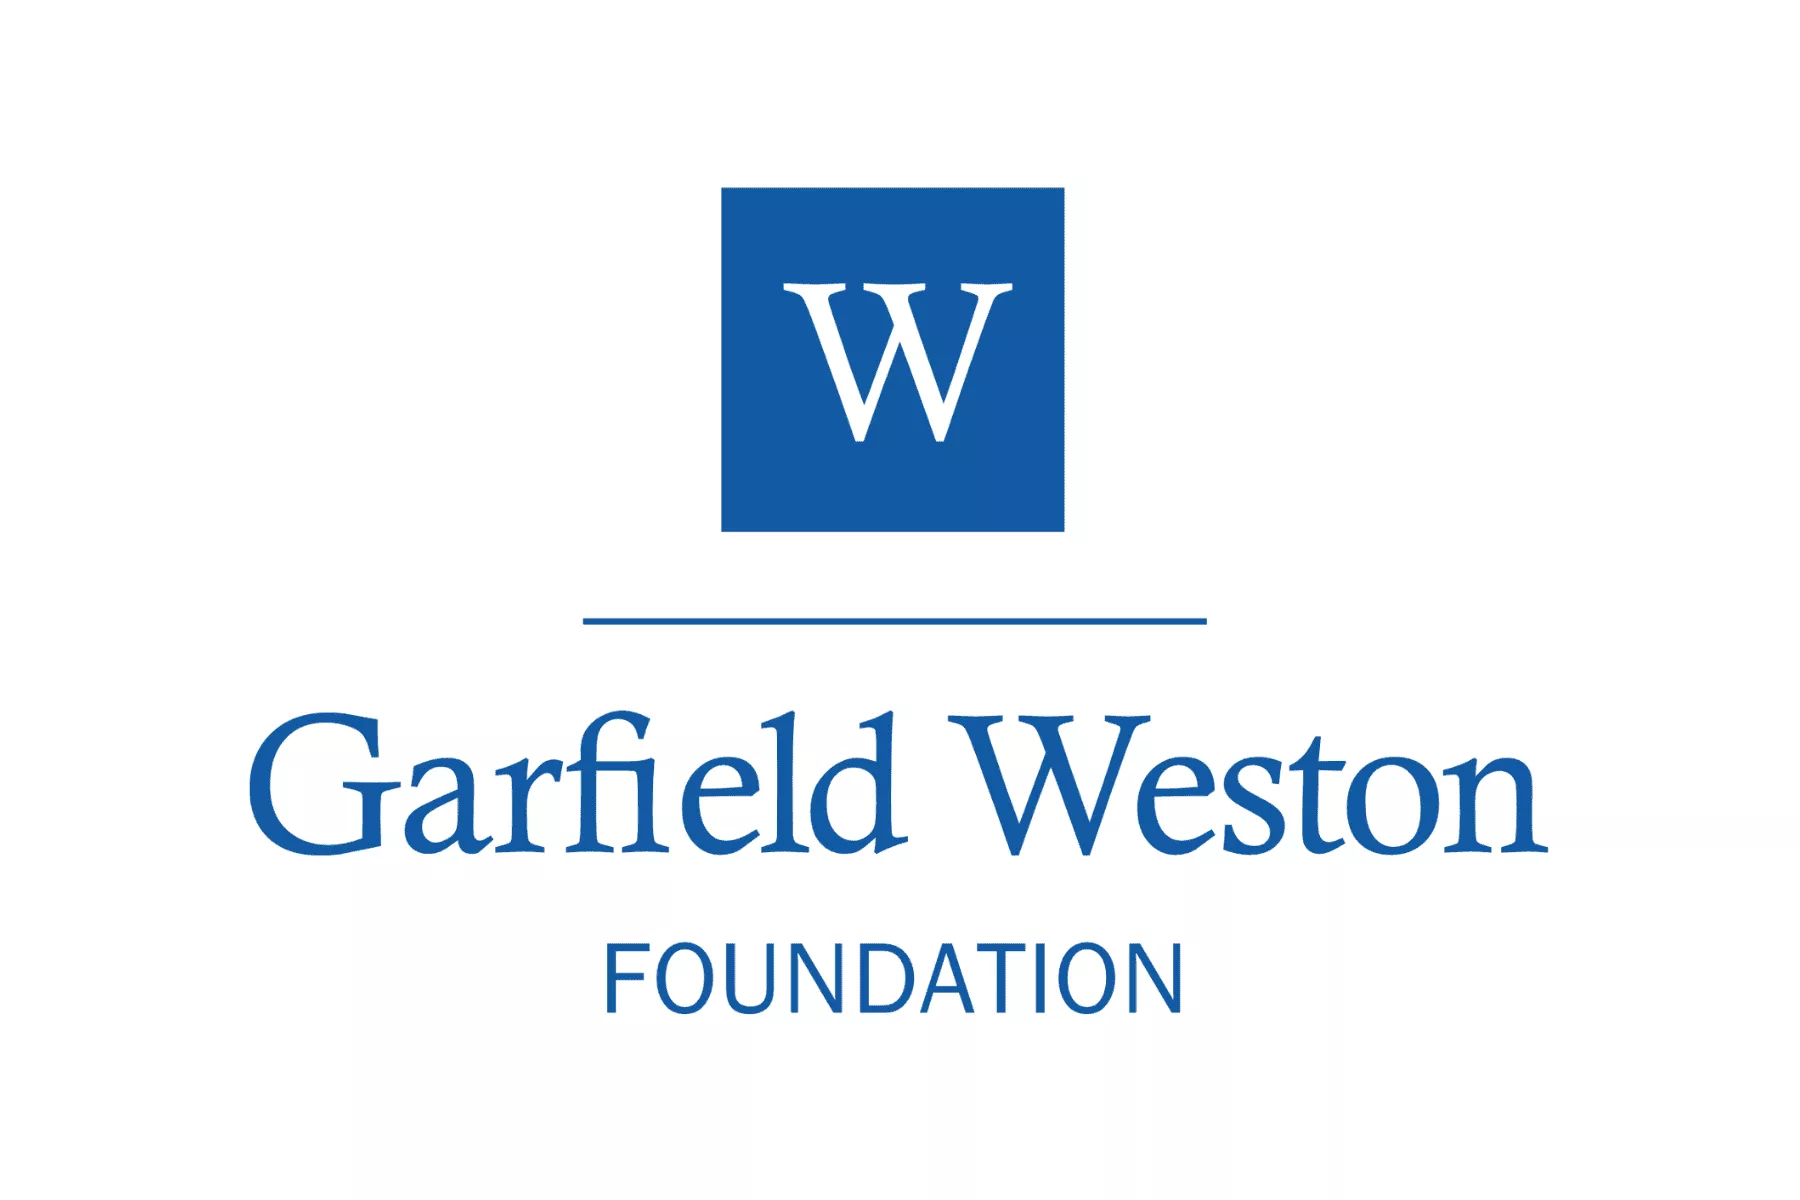 A blue logo that reads 'The Garfield Weston Foundation'